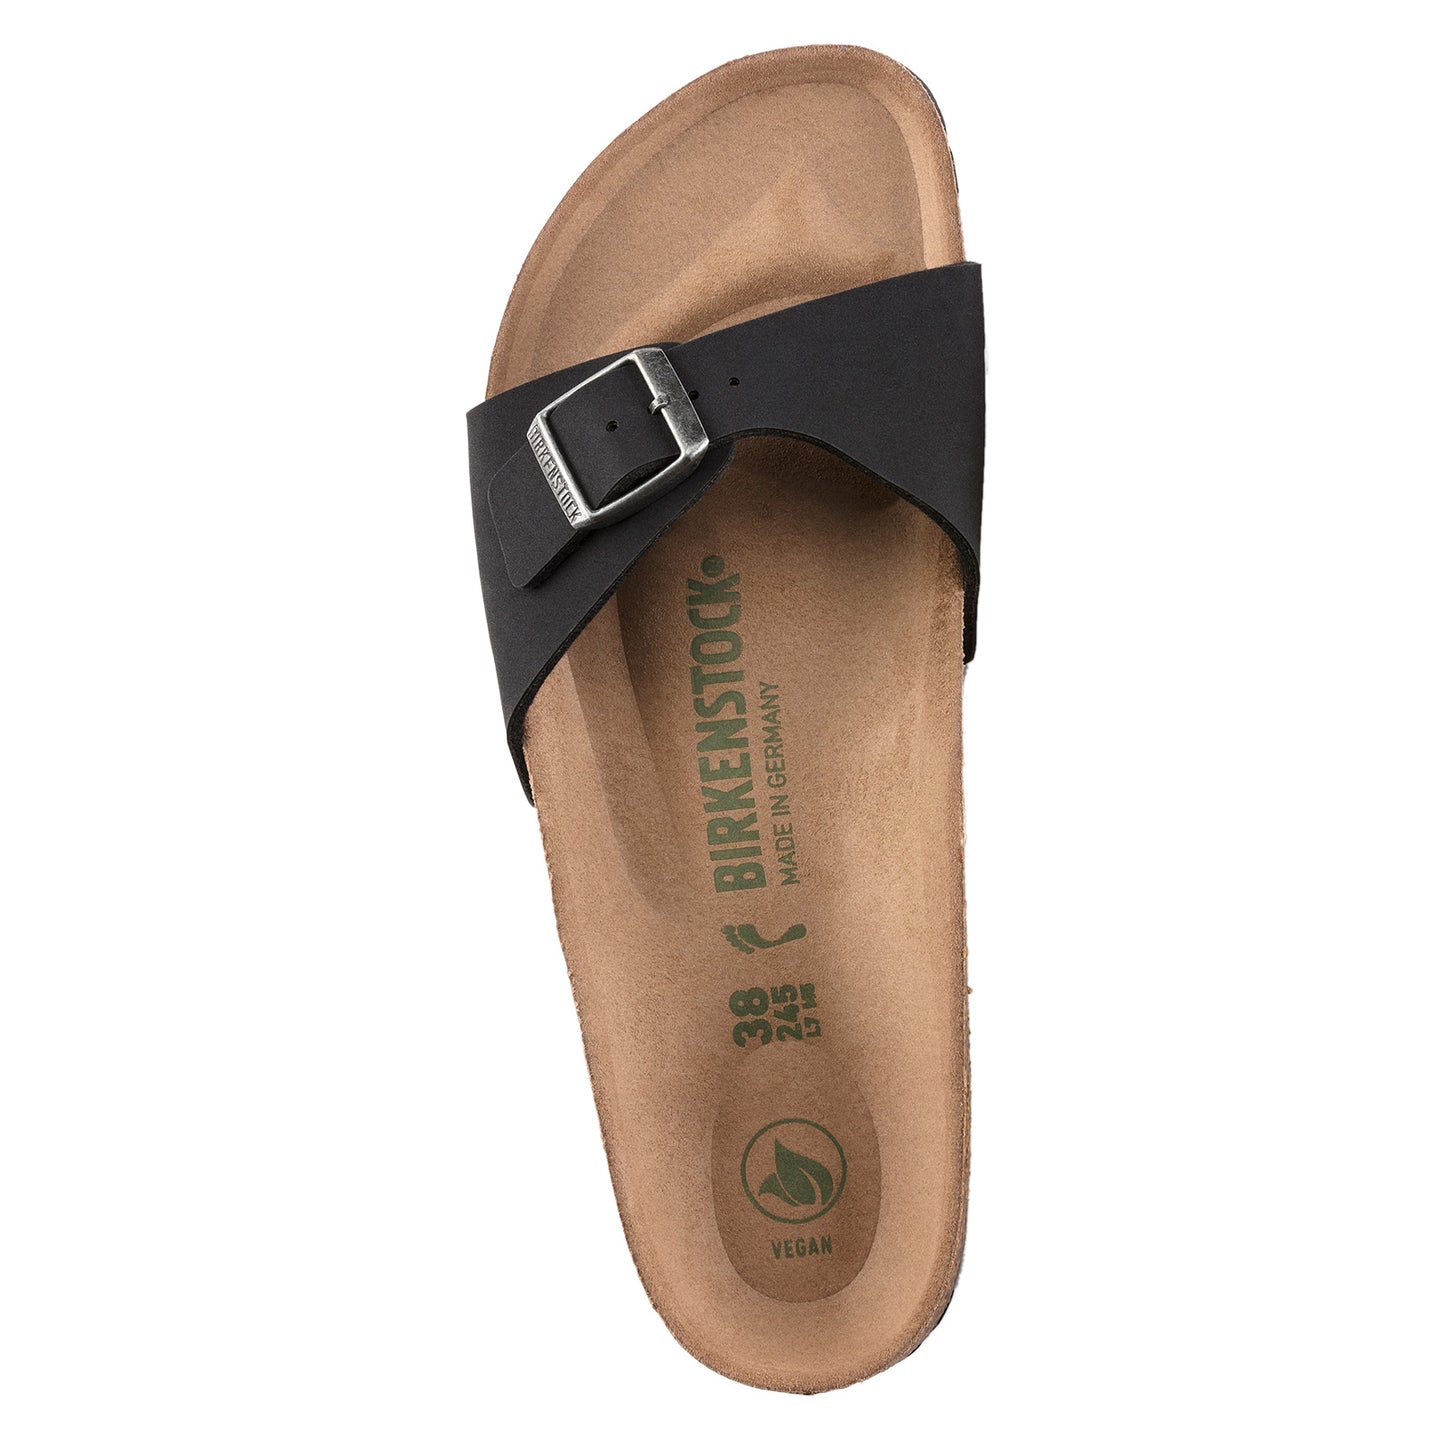 Peltz Shoes  Women's Birkenstock Madrid Vegan Sandal - Narrow Fit BLACK 1020 060 N